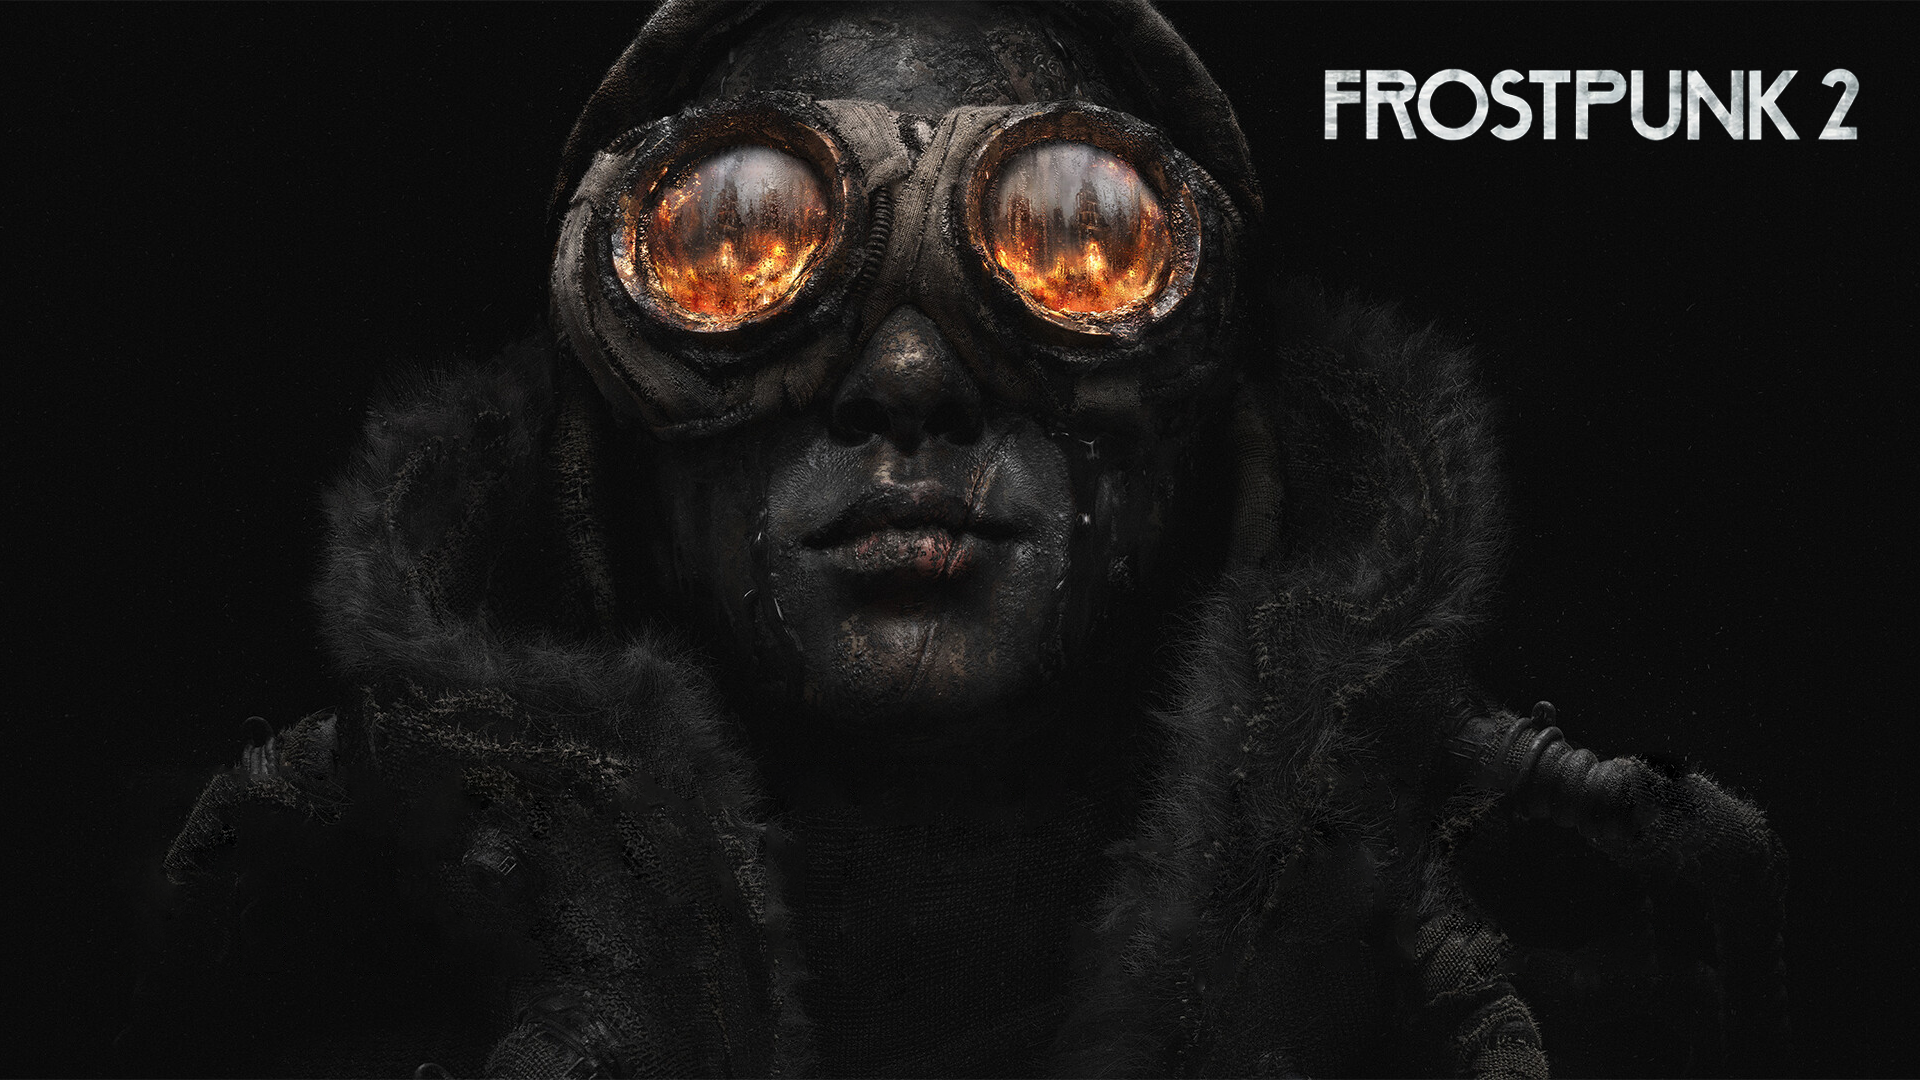 Frostpunk 2 - Gamecinematic Trailer